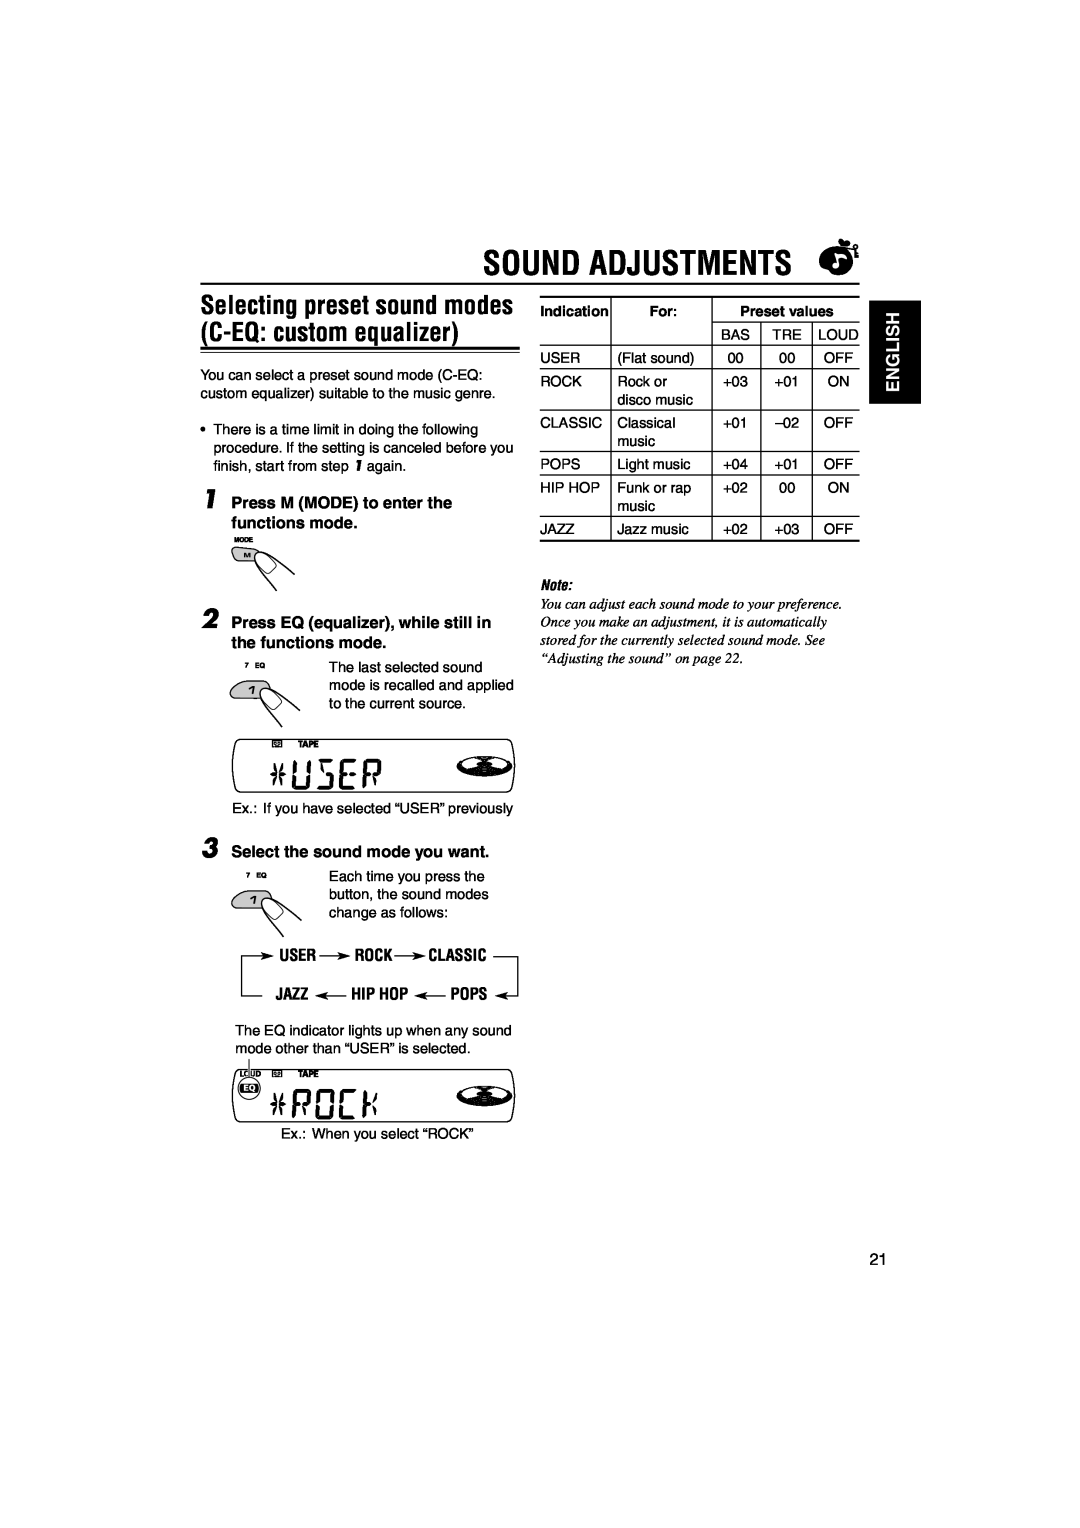 JVC KS-FX842R, GET0140-001A Sound Adjustments, Selecting preset sound modes C-EQ custom equalizer, English, Preset values 